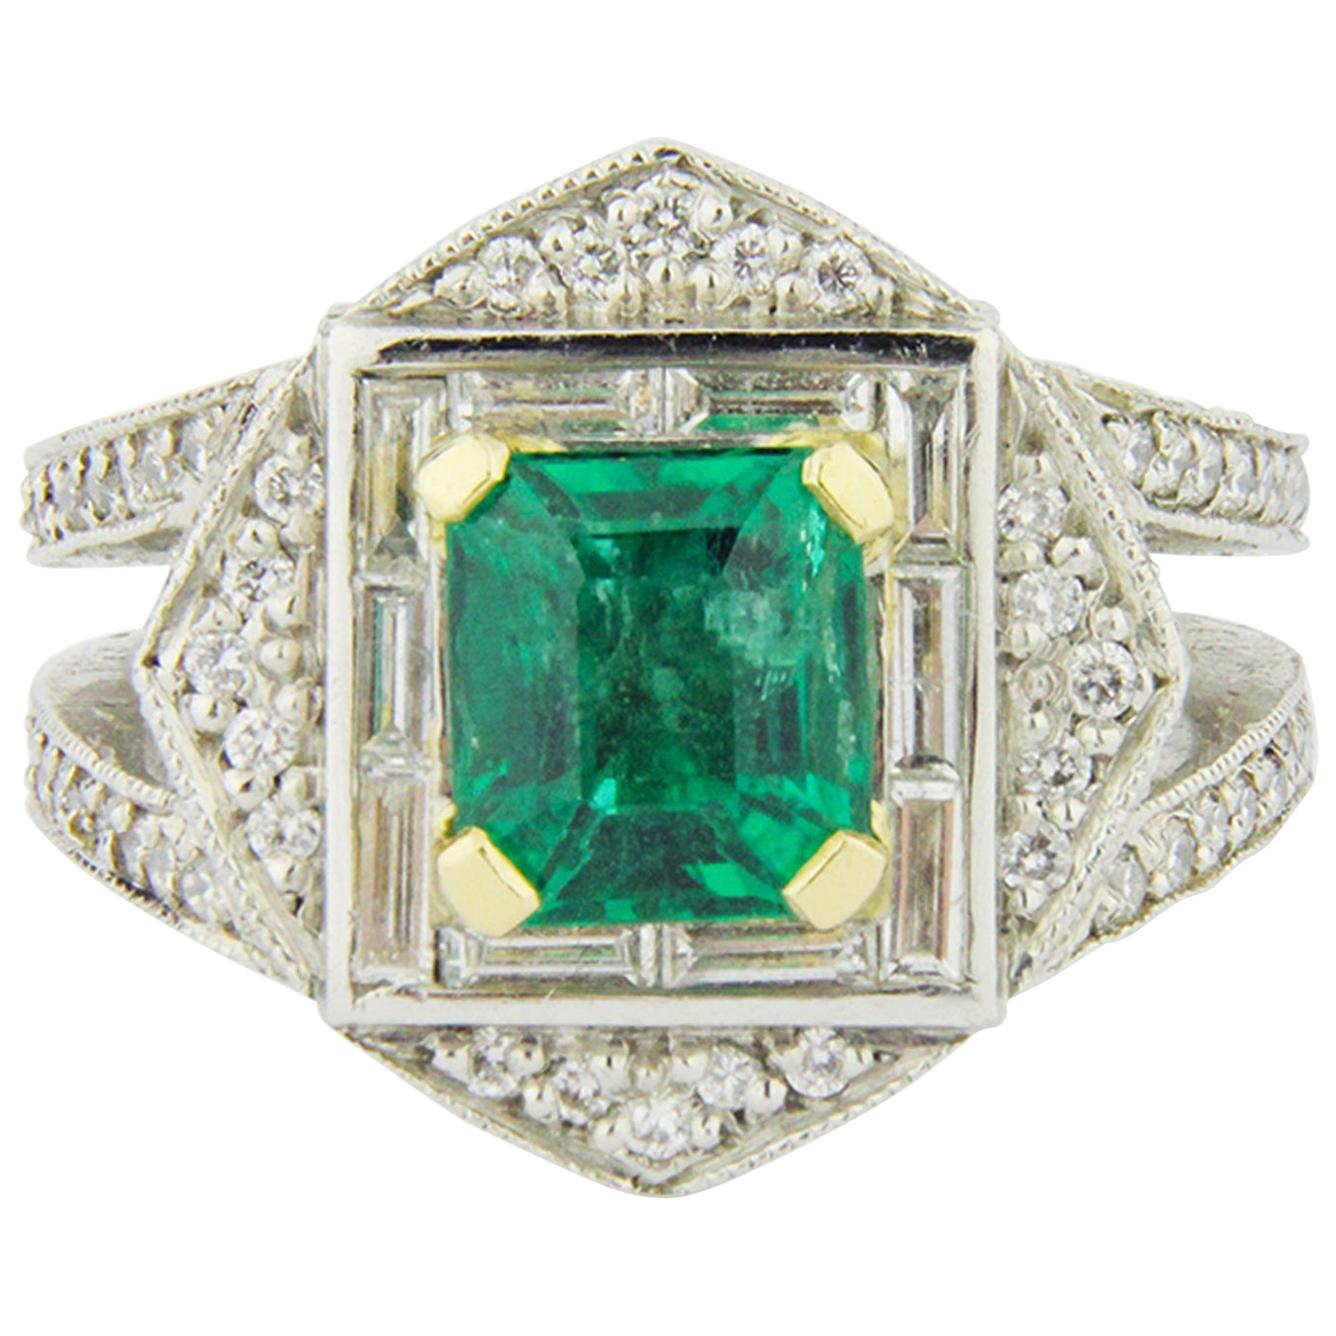 Exceptional Platinum, Emerald and Diamond Ring